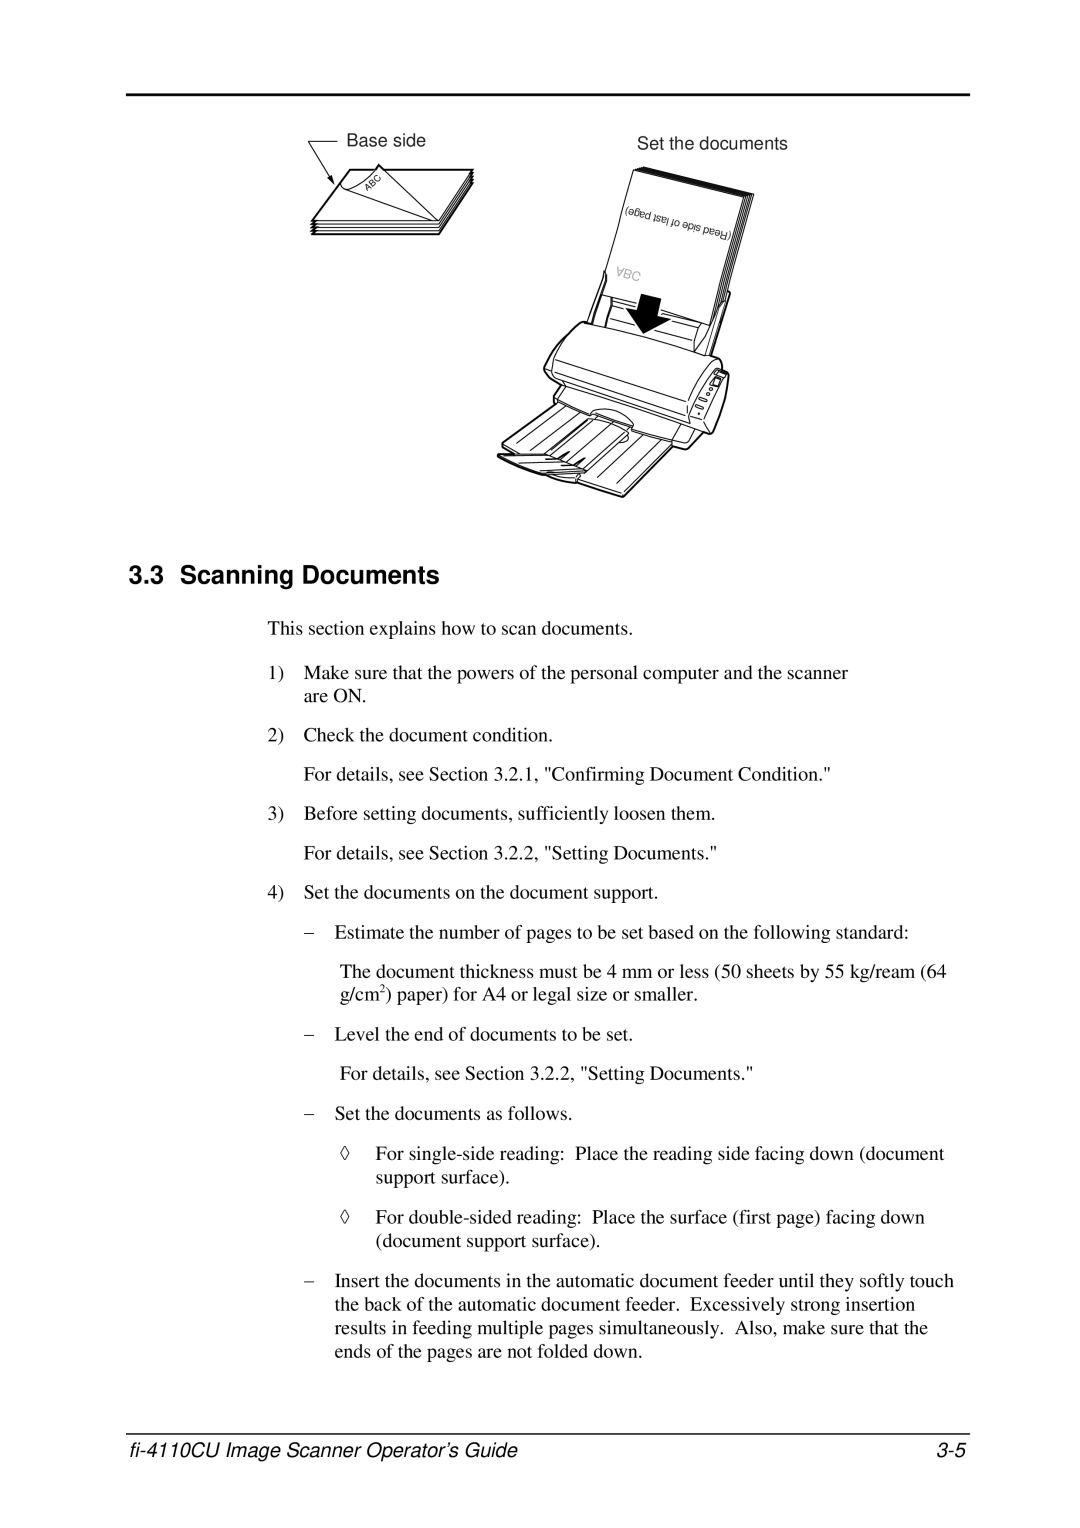 Fujitsu C150-E194-01EN manual Scanning Documents, fi-4110CU Image Scanner Operator’s Guide, Base side, Set the documents 